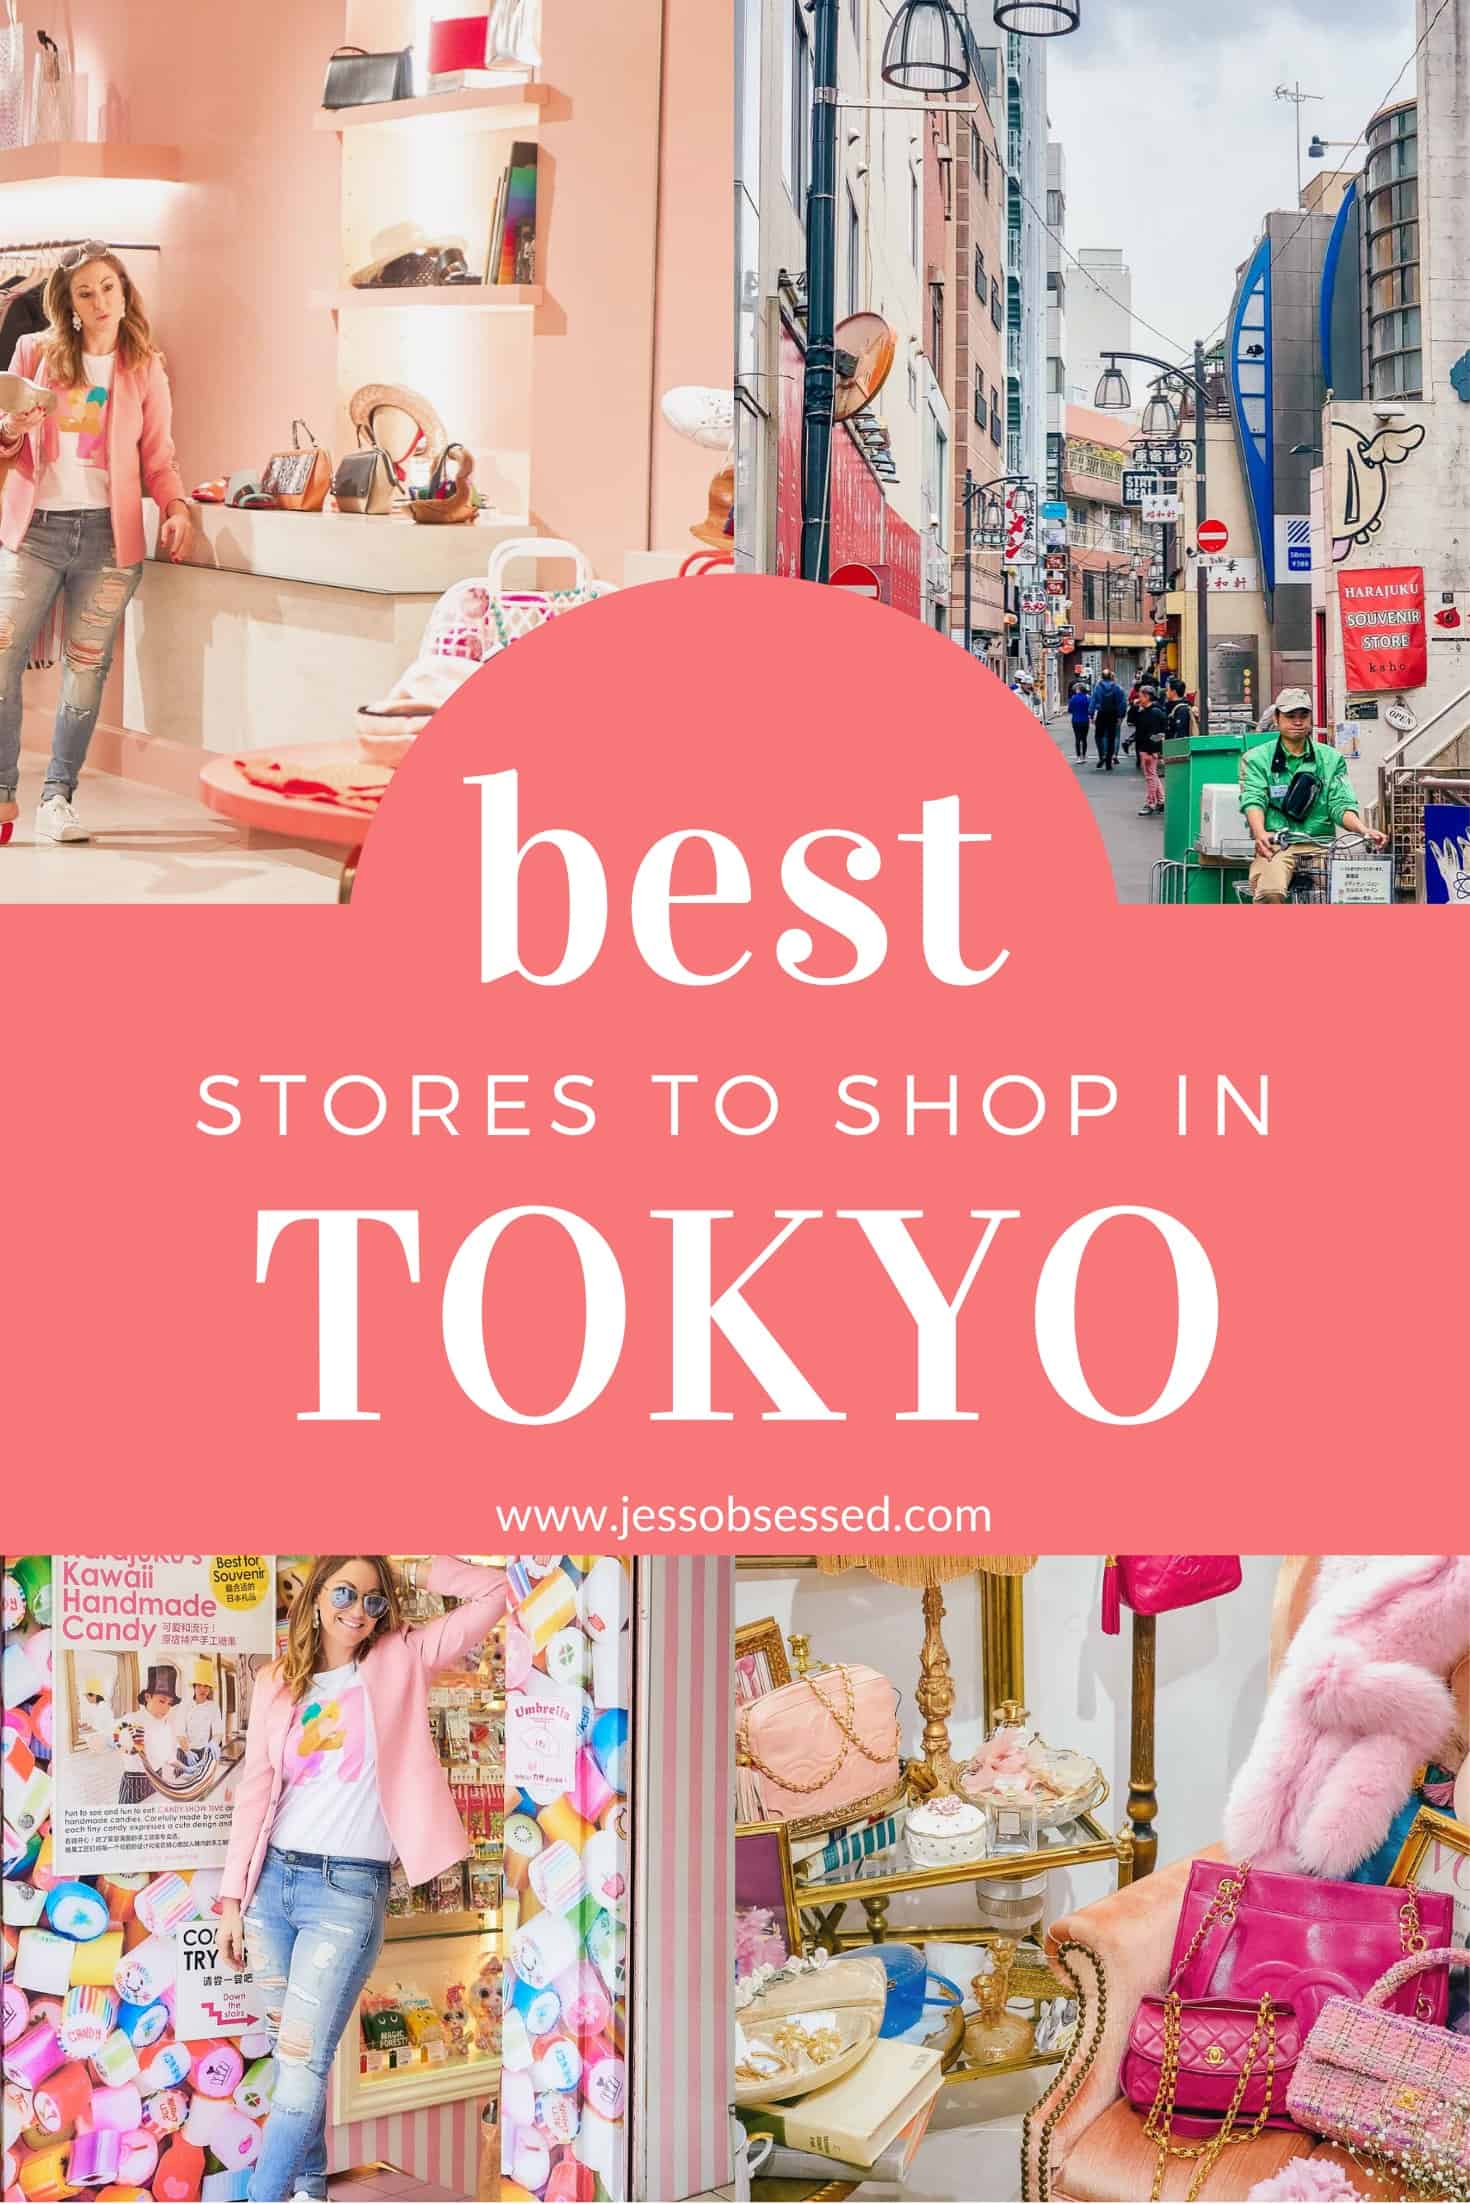 Best Stores To Shop In Tokyo by Neighborhood